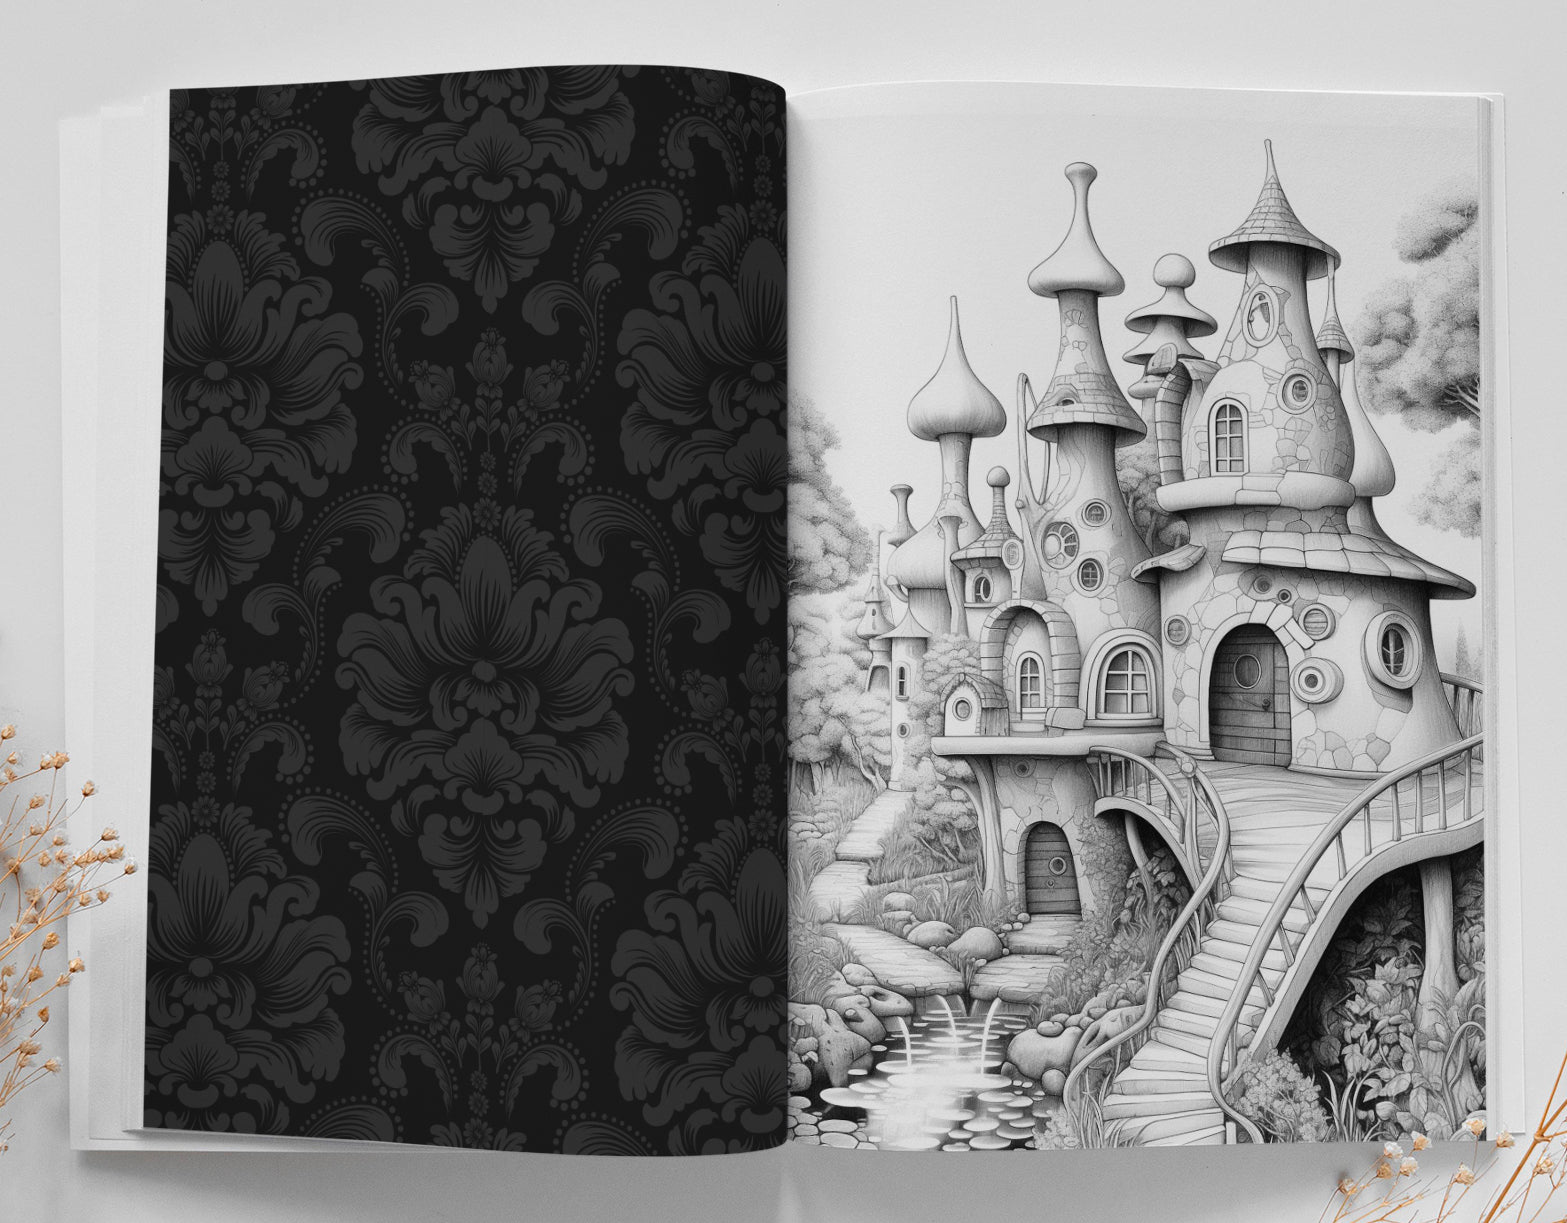 Whimsical Homes Coloring Book (Printbook) - Monsoon Publishing USA